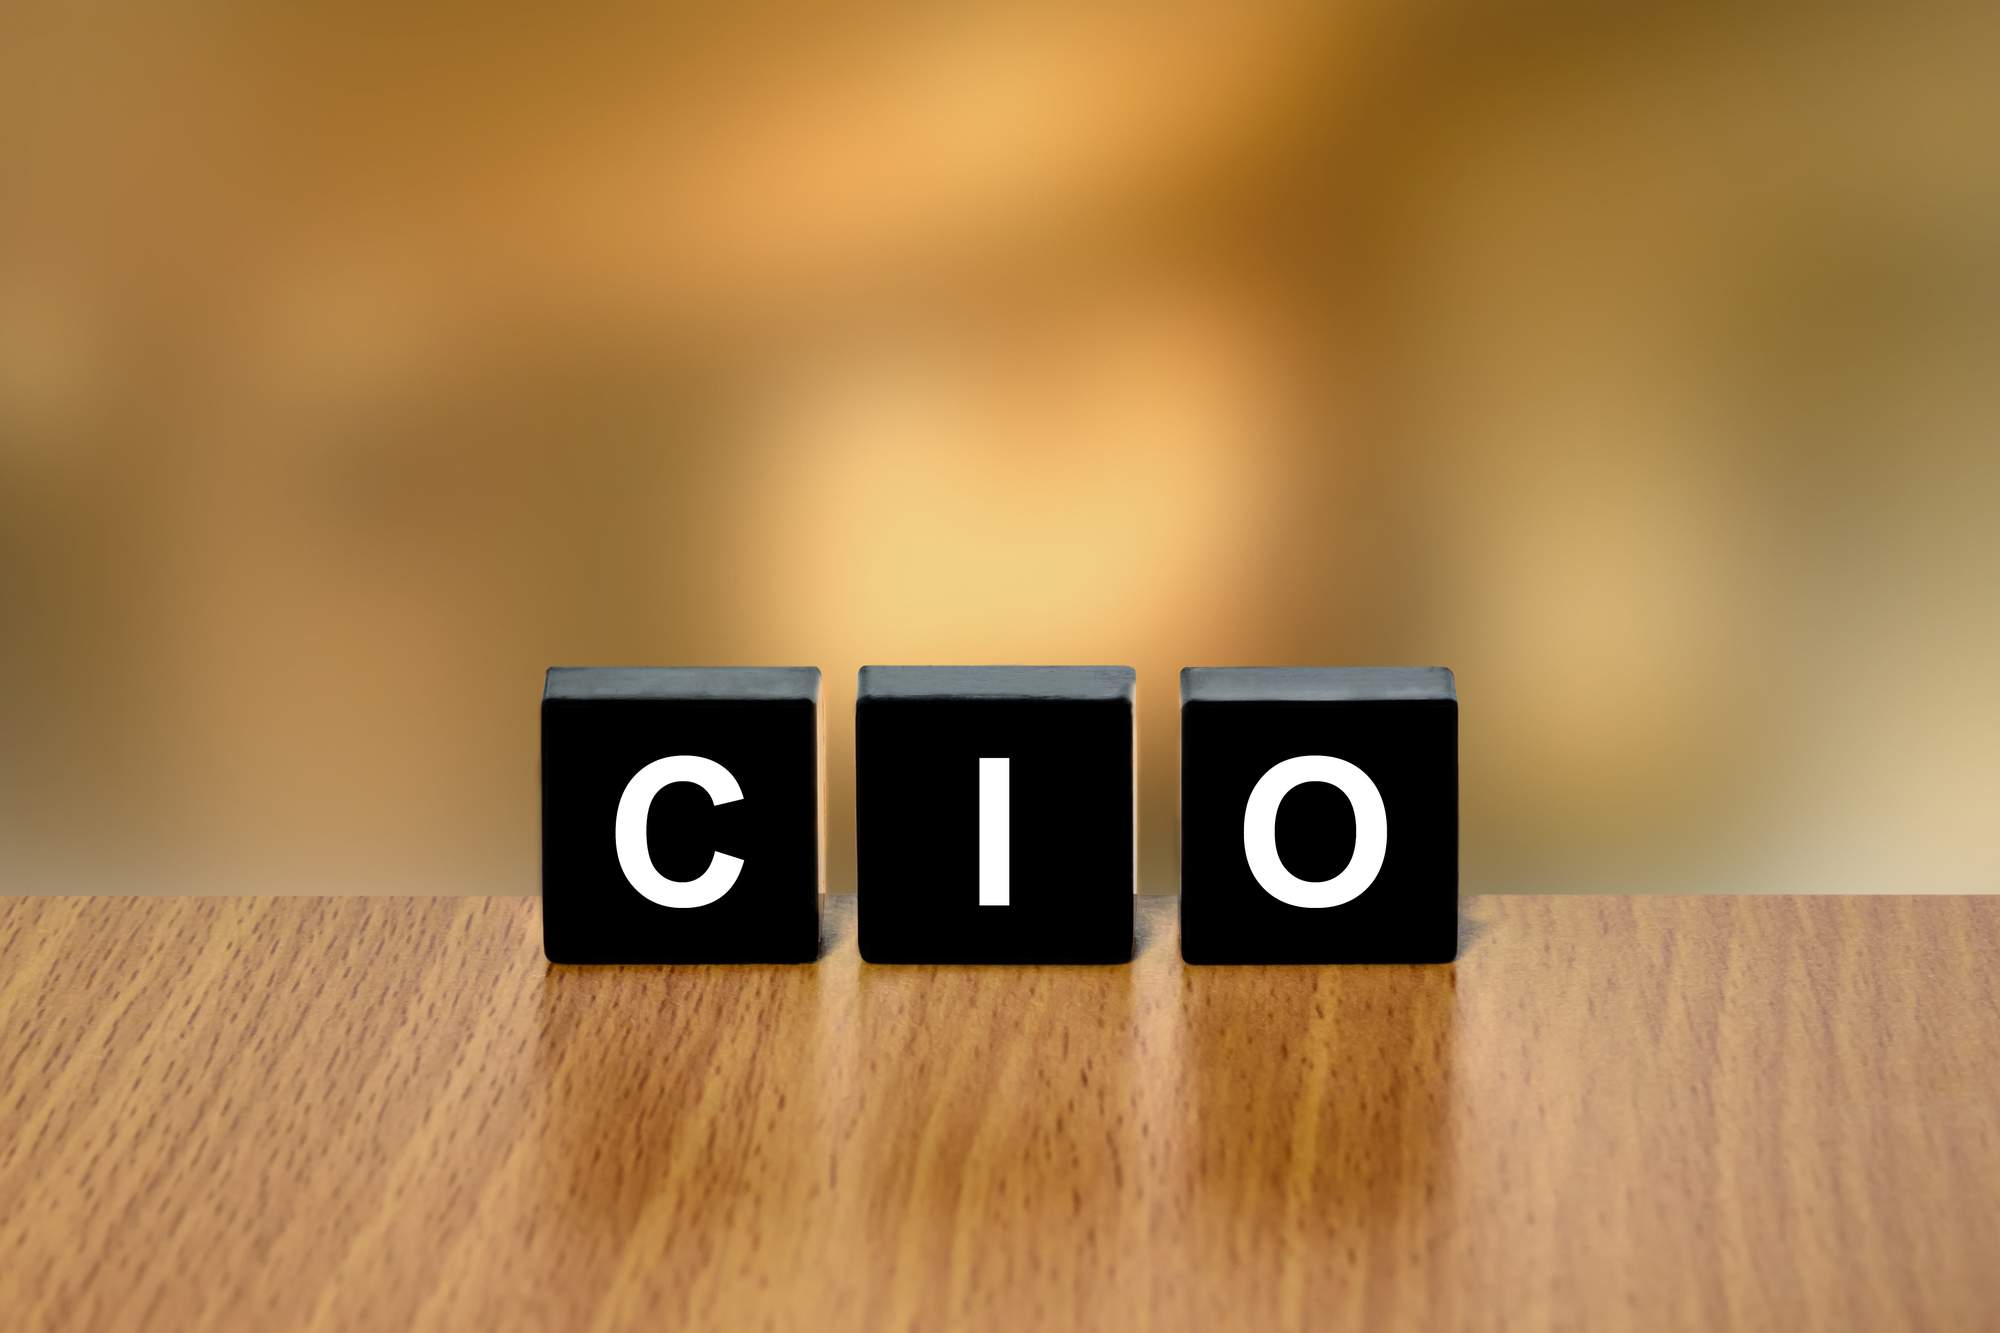 CIO acronym using letter blocks